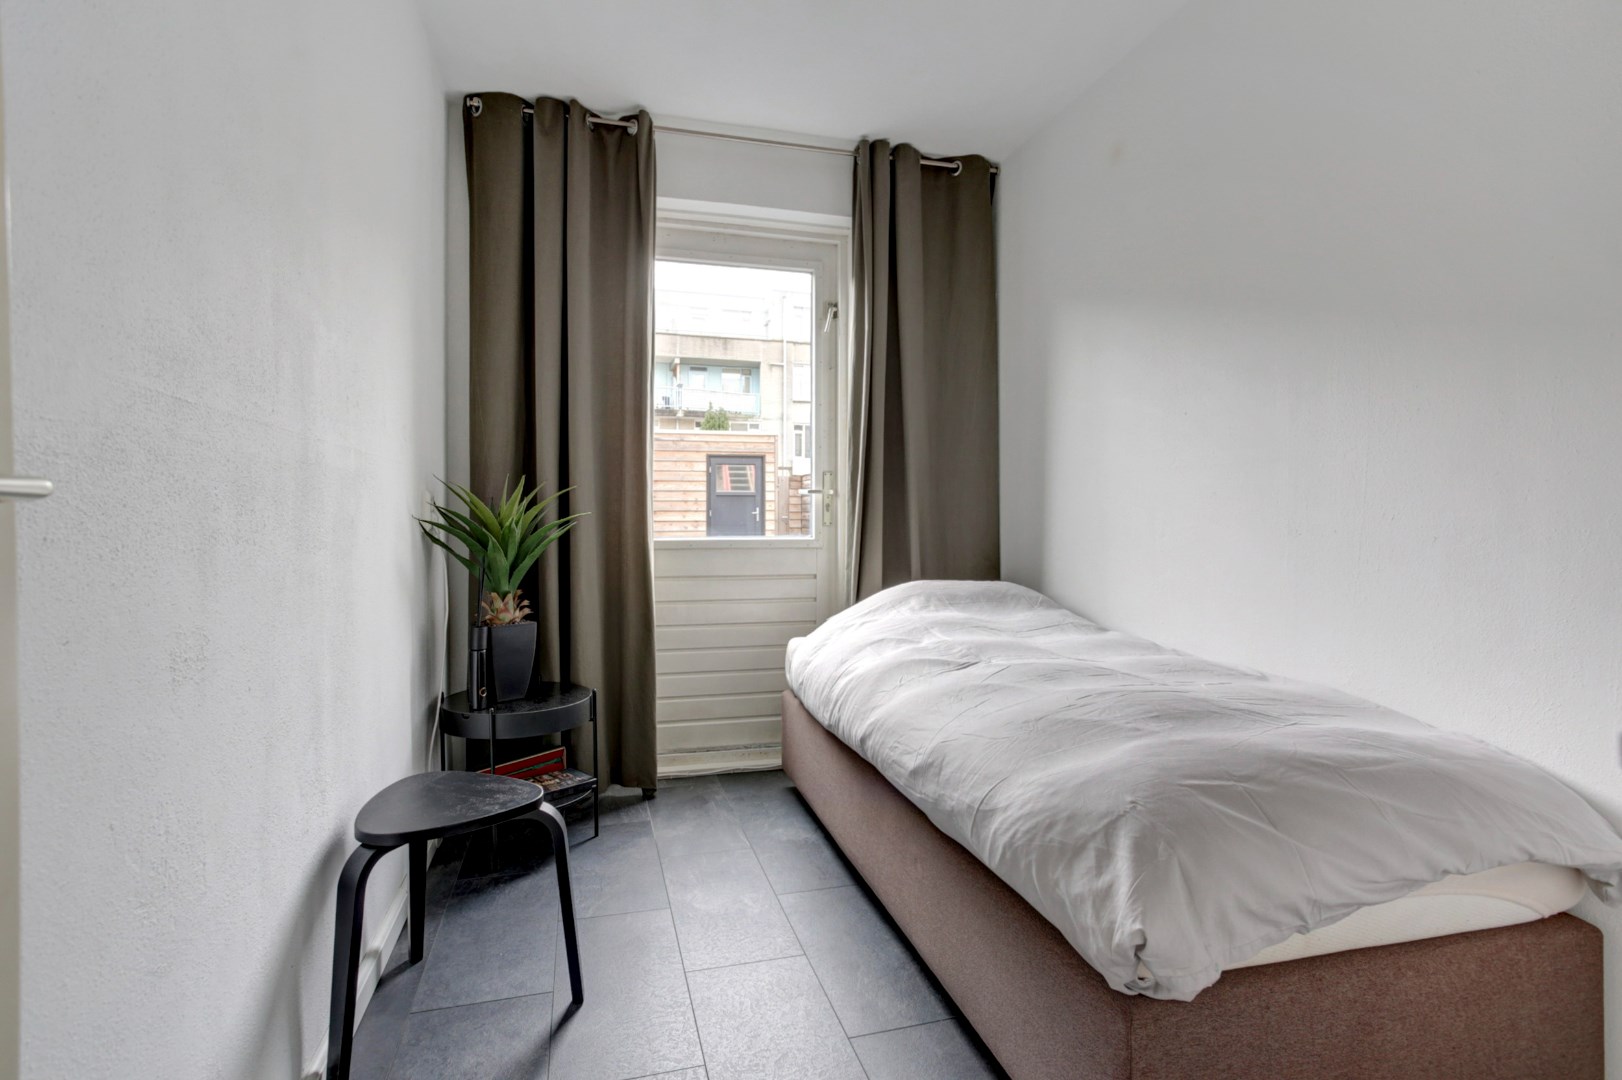 Ruime 4-kamer maisonnette woning met ruime tuin met riant afsluitbare overkapping met berging. 